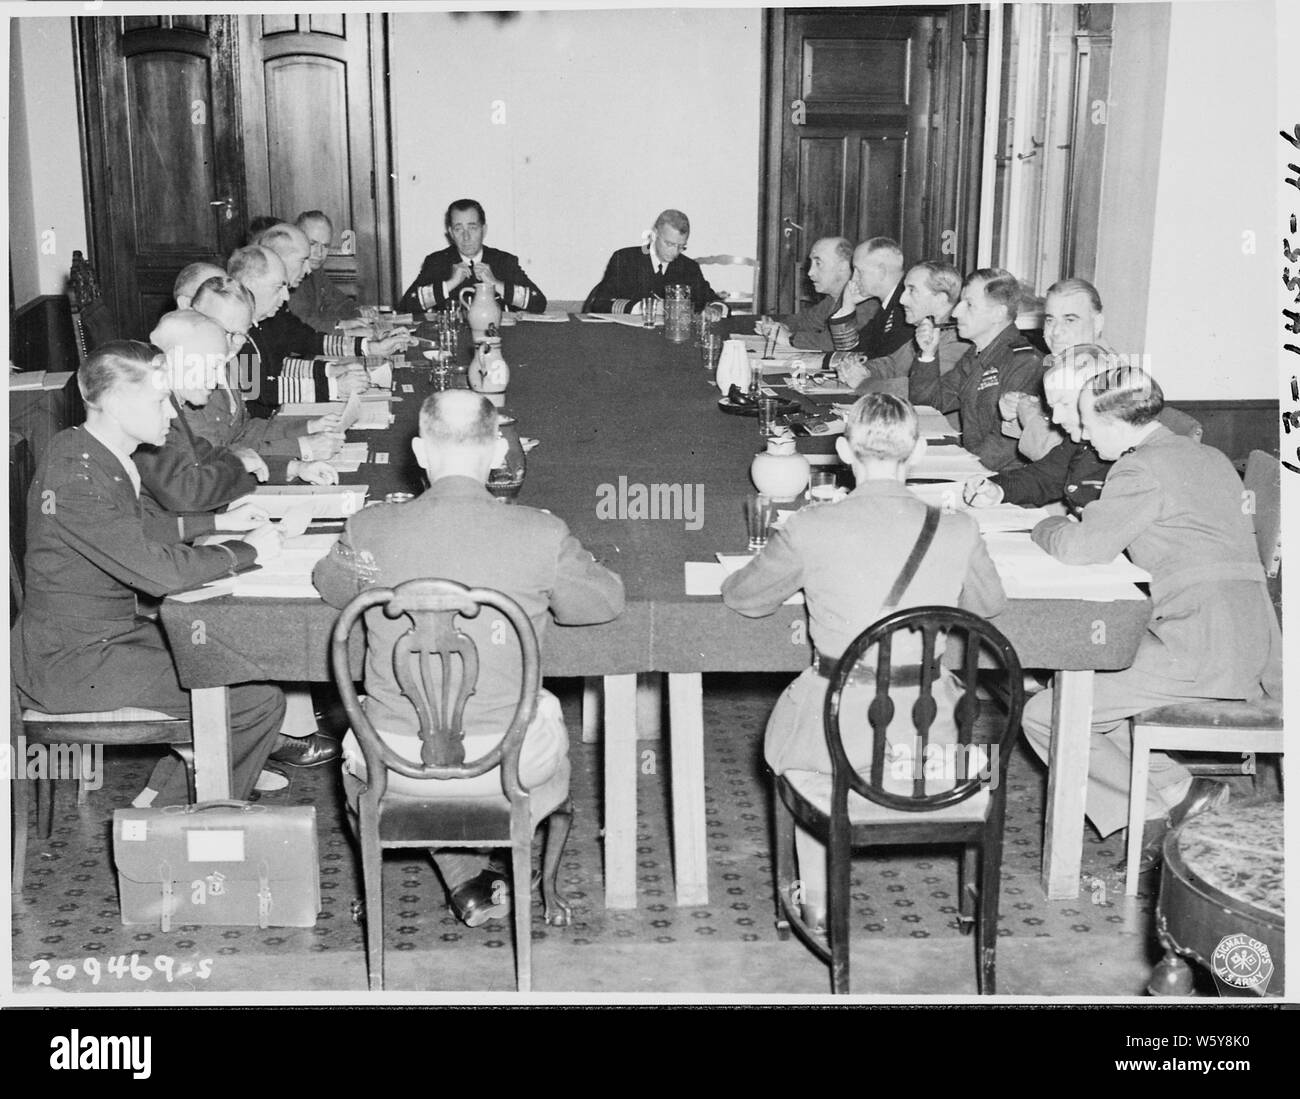 The Combined Chiefs of Staff meet on the 4th day of the Potsdam Conference in Germany. Clockwise, L to R: Maj. Gen. Lauris Norstad, Gen. Henry H. Arnold, Gen. George C. Marshall, Brig. Gen. Andrew J. McFarland, Adm. William D. Leahy, Adm. Ernest J. King, Vice-Adm. C. M. Cooke, Jr., Gen. Brehon B. Somervell, Rear Adm. H. A. Flanigan, Captain C. J. Moore, Lt. Gen. Sir Gordon McCready, Adm. Sir Andrew Cunningham, Field Marshall Sir Alan Brooke, Marshall Sir Charles Portal, Gen. Sir Hastings Ismay, Gen. L. C. Hollisd, Brig. A. T. Cornwall-Jones, Col. Thomas Haddon, and Lt. Gen. John E. Hull. Stock Photo